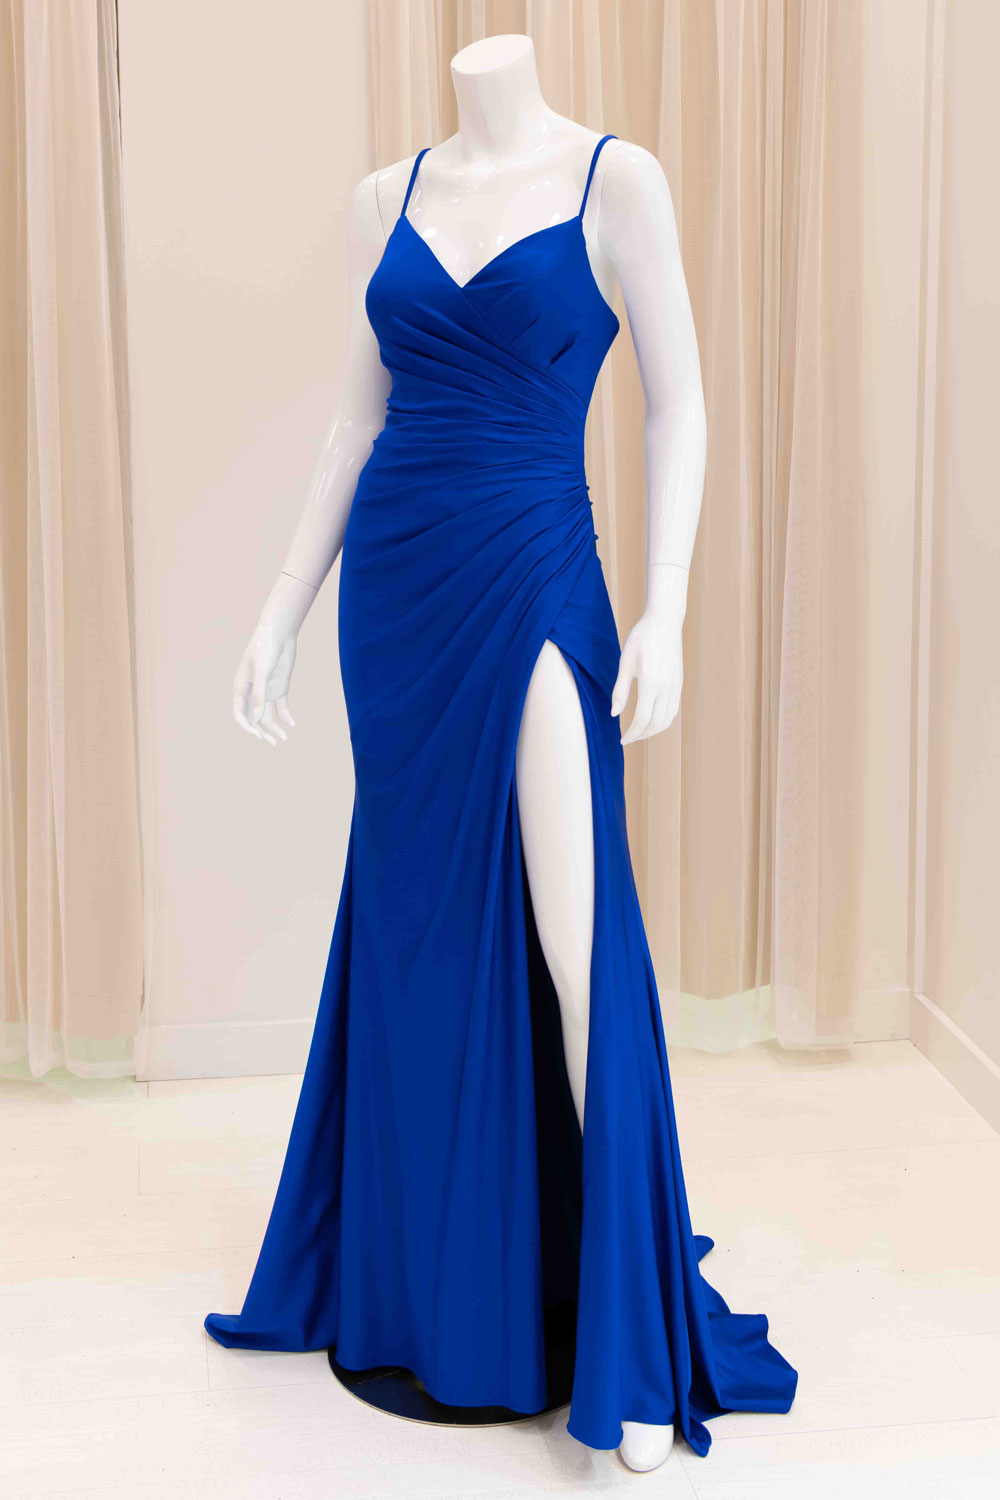 Jaida Satin Tie Back Evening Dress in Royal Blue